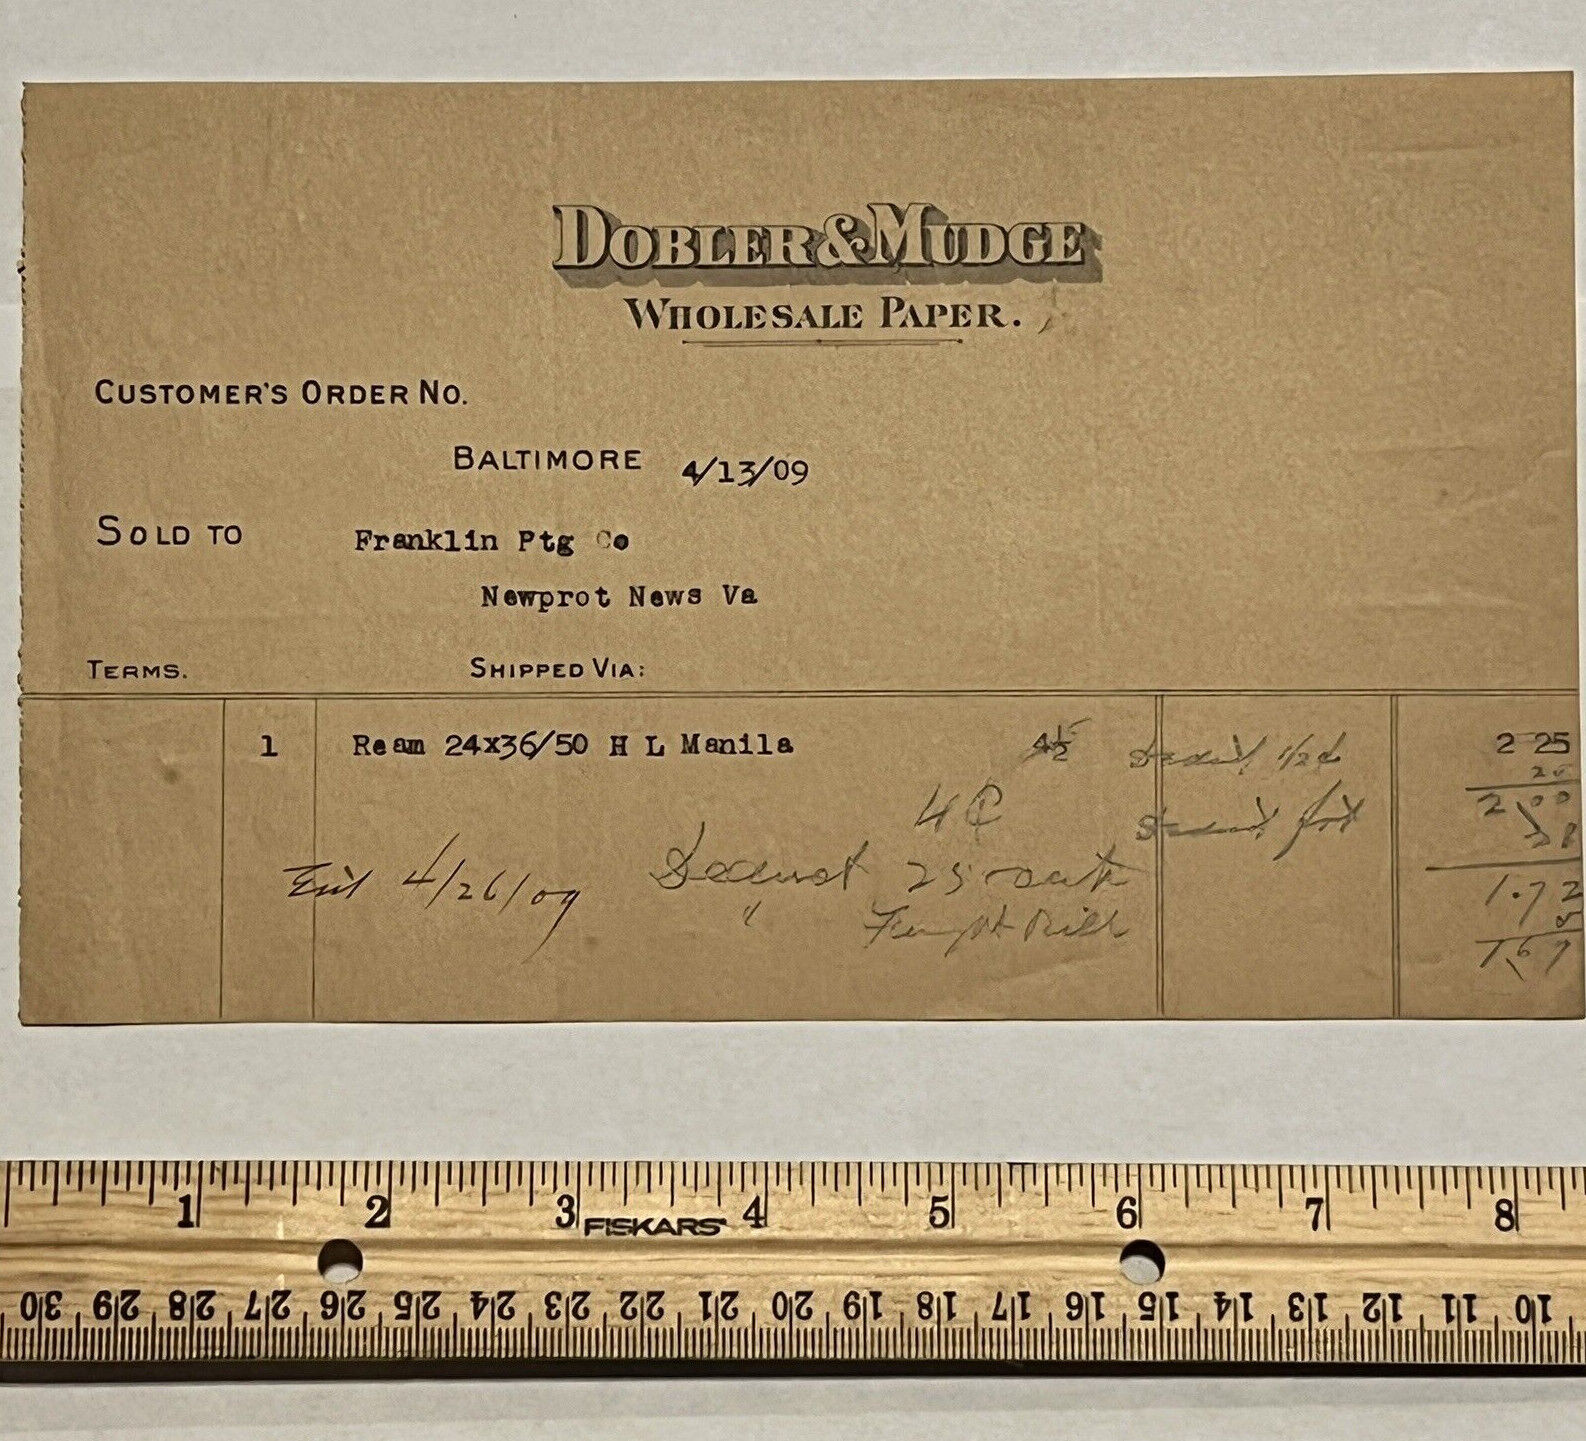 1909 DOBLER & MUDGE WHOLESALE PAPER RECEIPT BALTIMORE MARYLAND